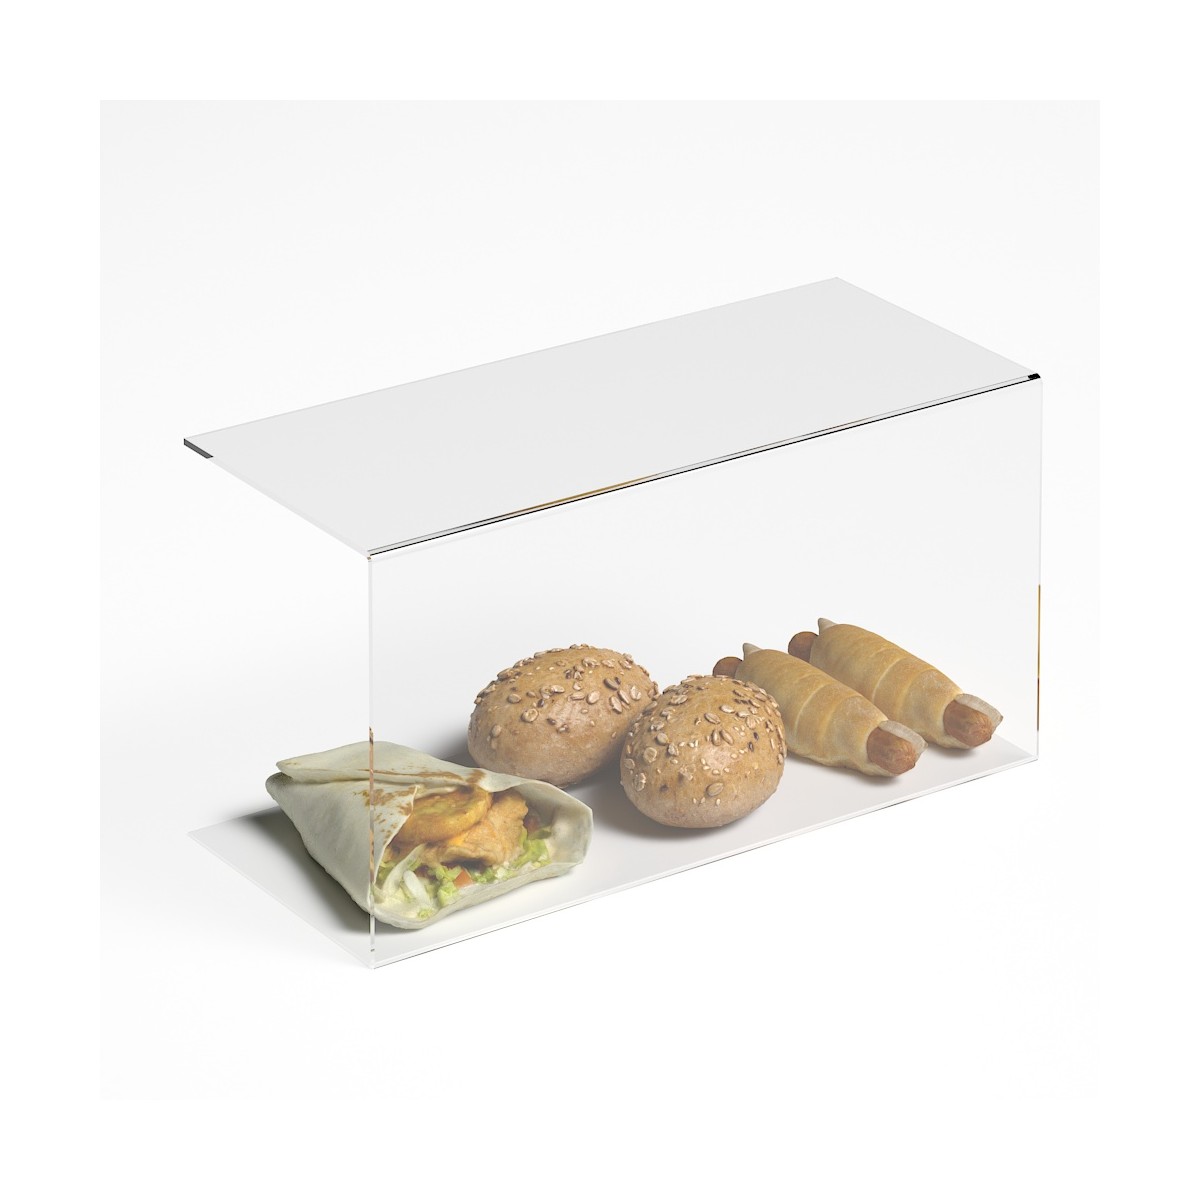 E-1187 PAR-B - Parafiato parasputi in plexiglass trasparente per alimenti - Misure: 60x25x H30 cm